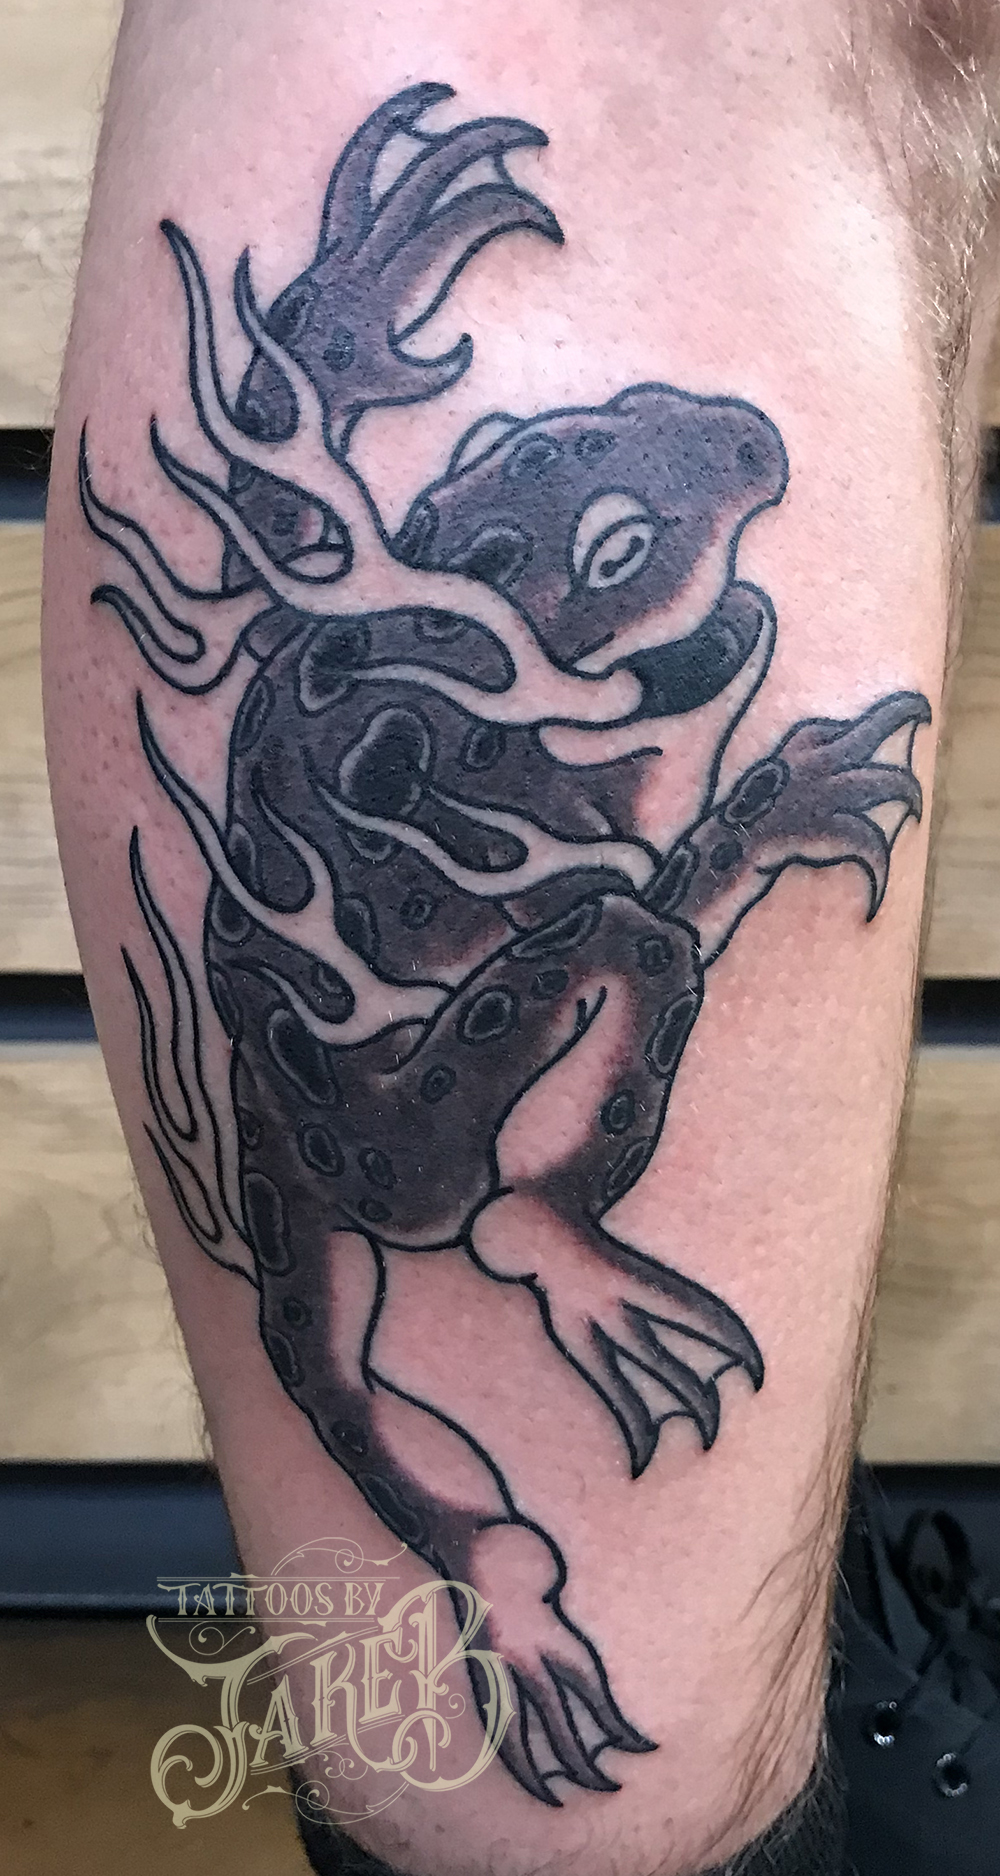 Black & grey frog tattoo by Jake B